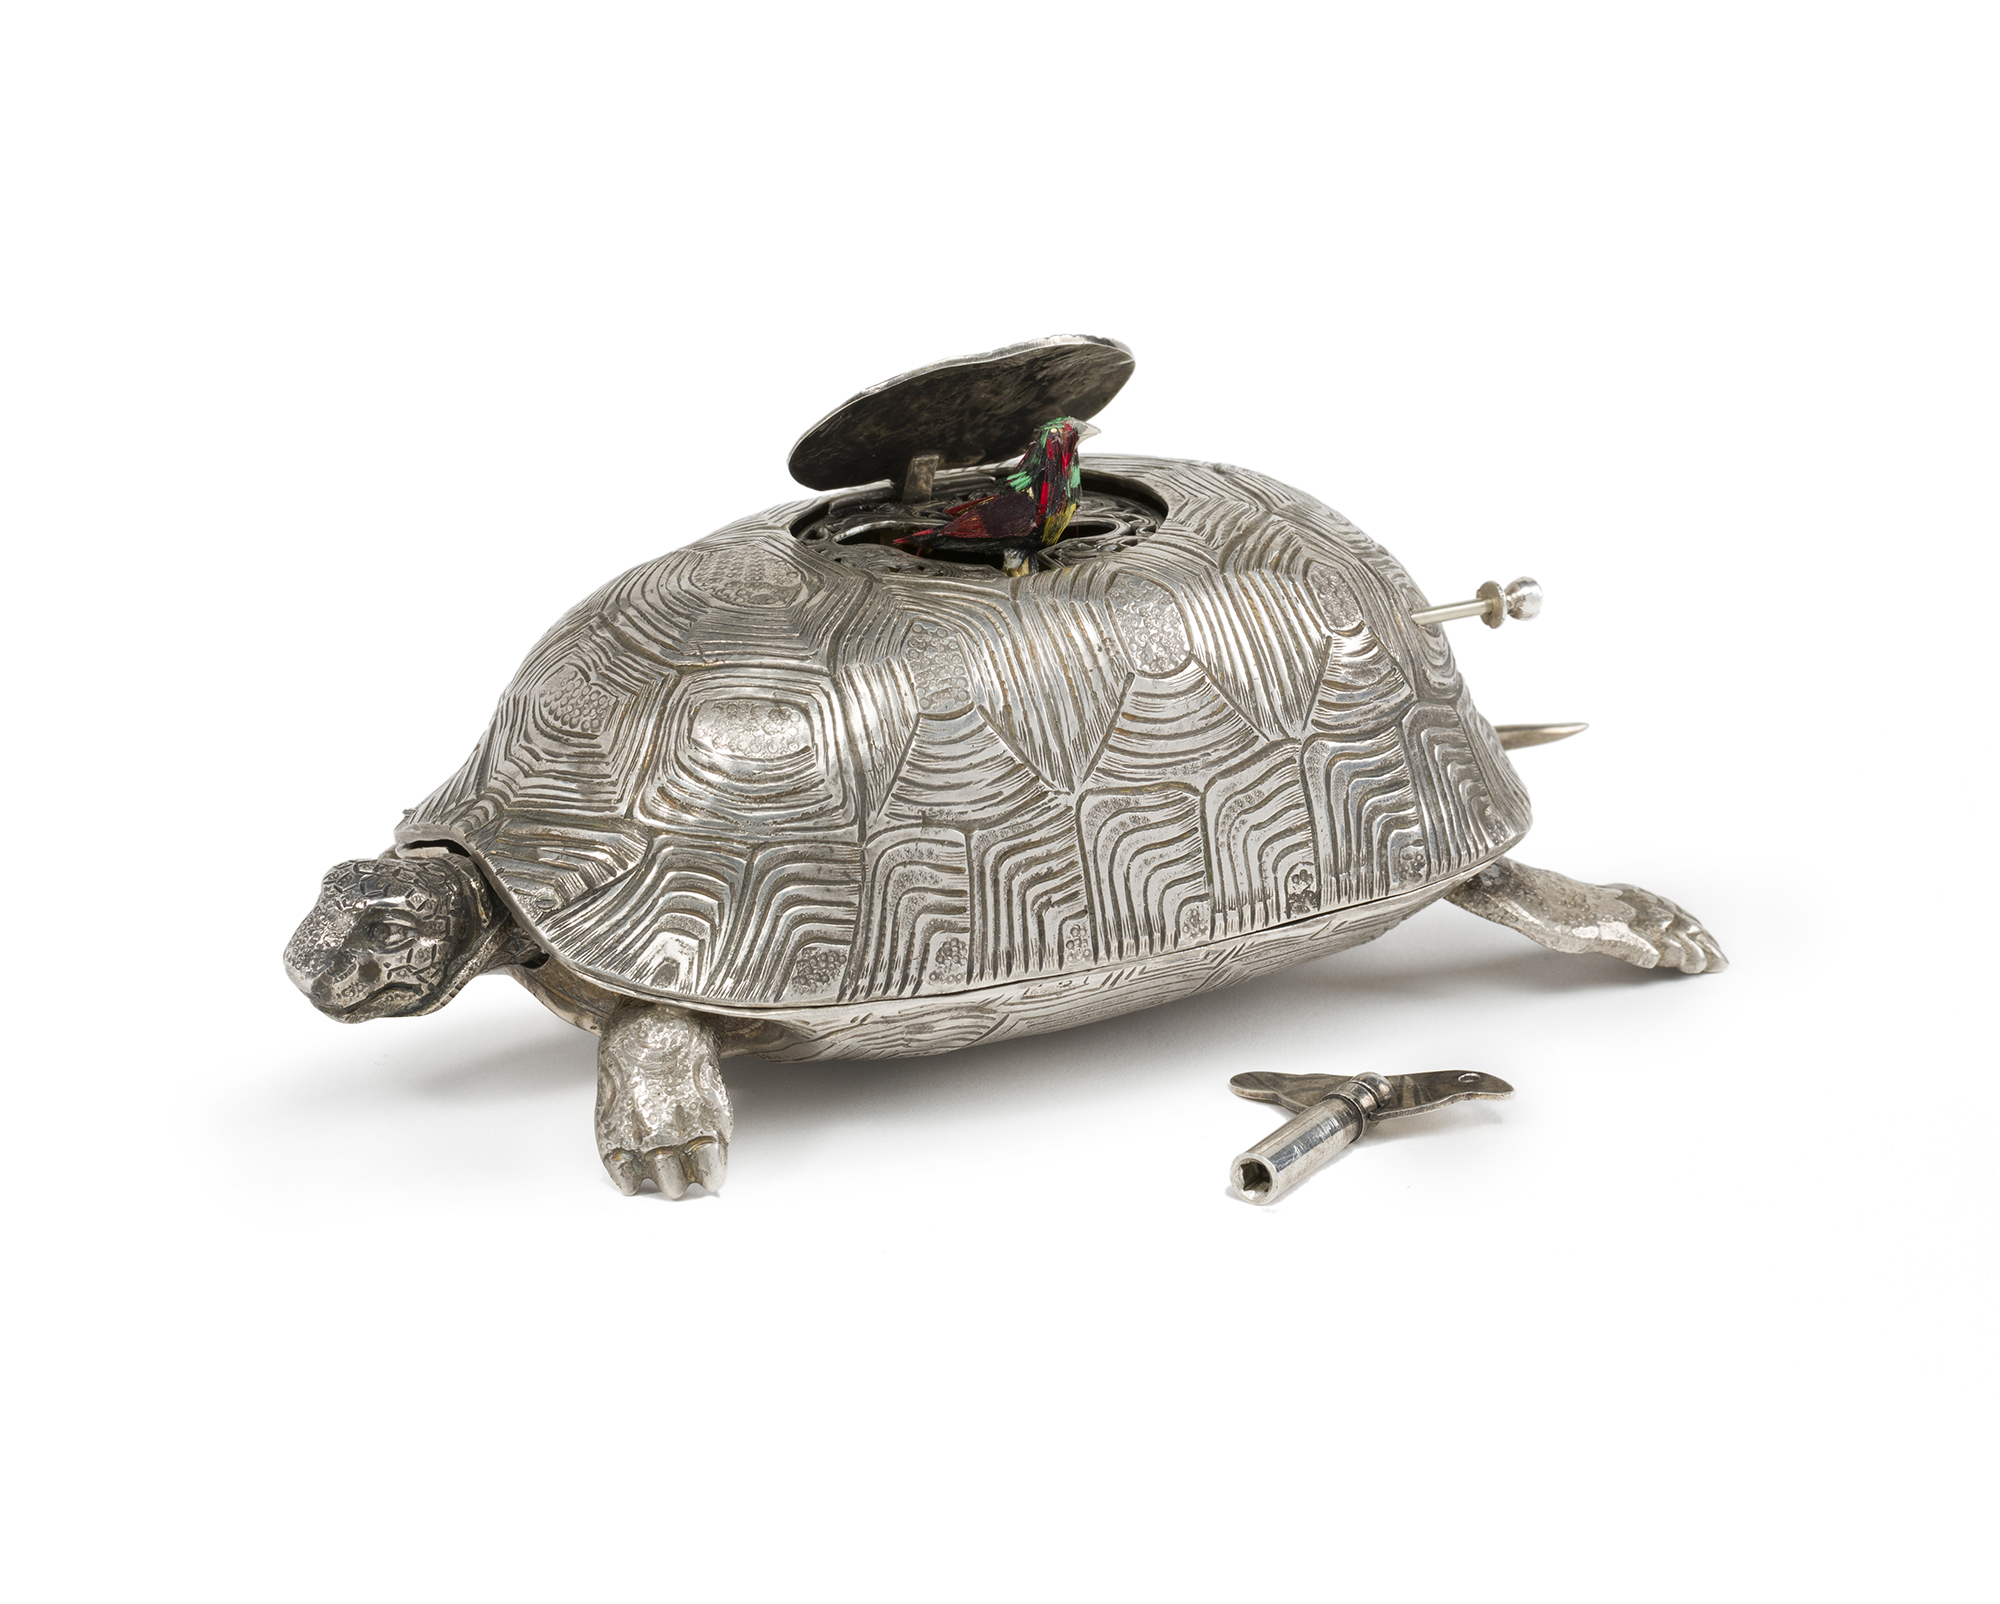 A silver turtle-form singing bird music box